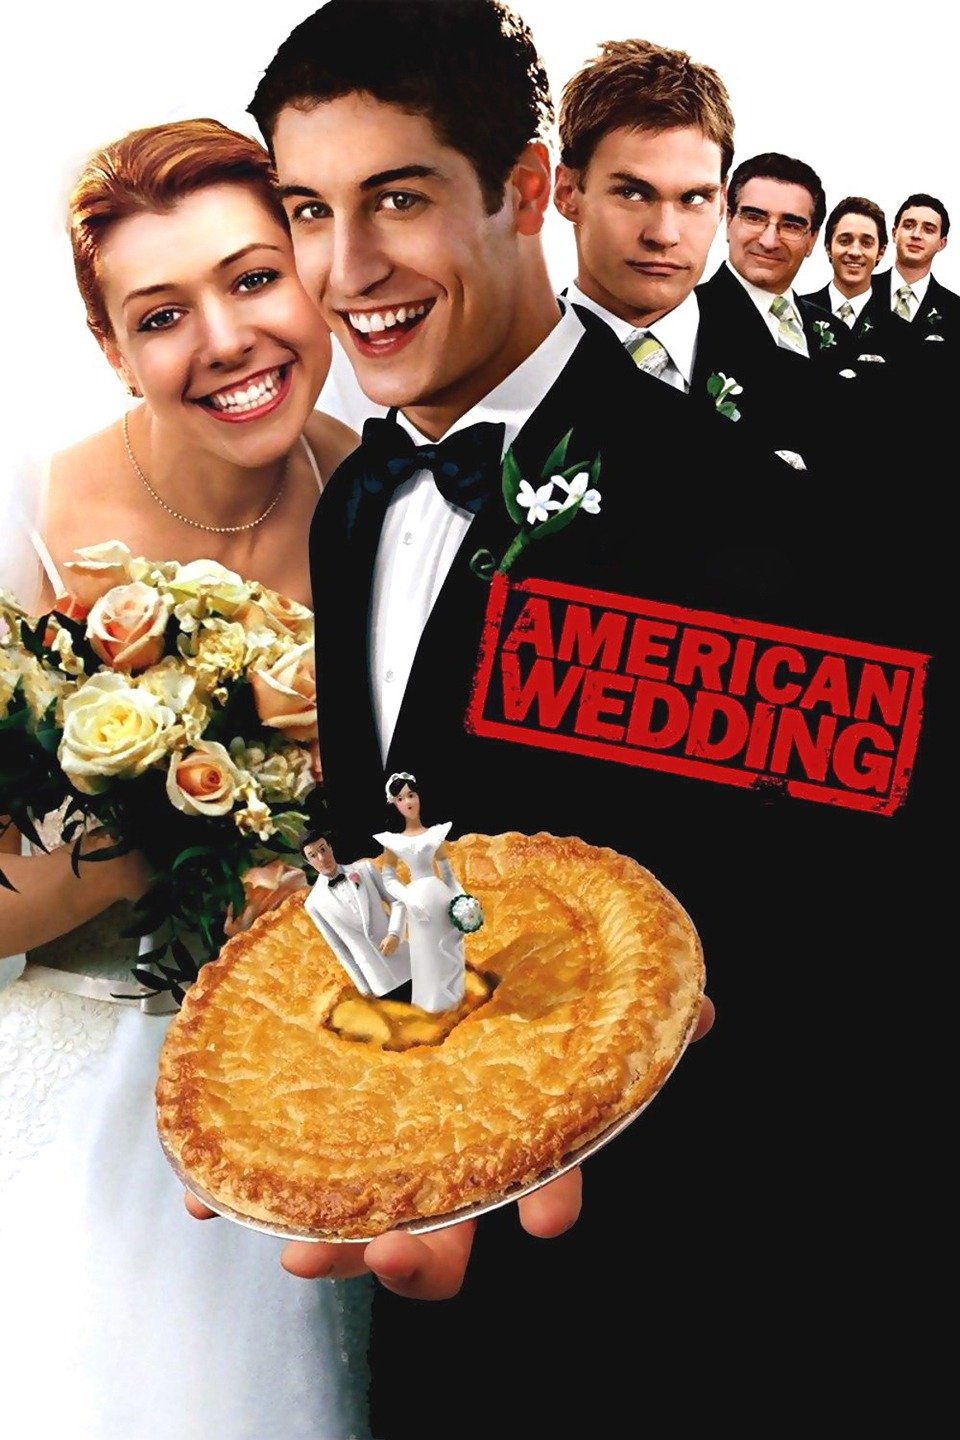 [MINI Super-HQ] American Wedding (2003) แผนแอ้มด่วน ป่วนก่อนวิวาห์ ภาค 3 [1080p] [พากย์ไทย DTS + เสียงอังกฤษ DTS] [บรรยายไทย + อังกฤษ] [เสียงไทย + ซับไทย] [OPENLOAD]